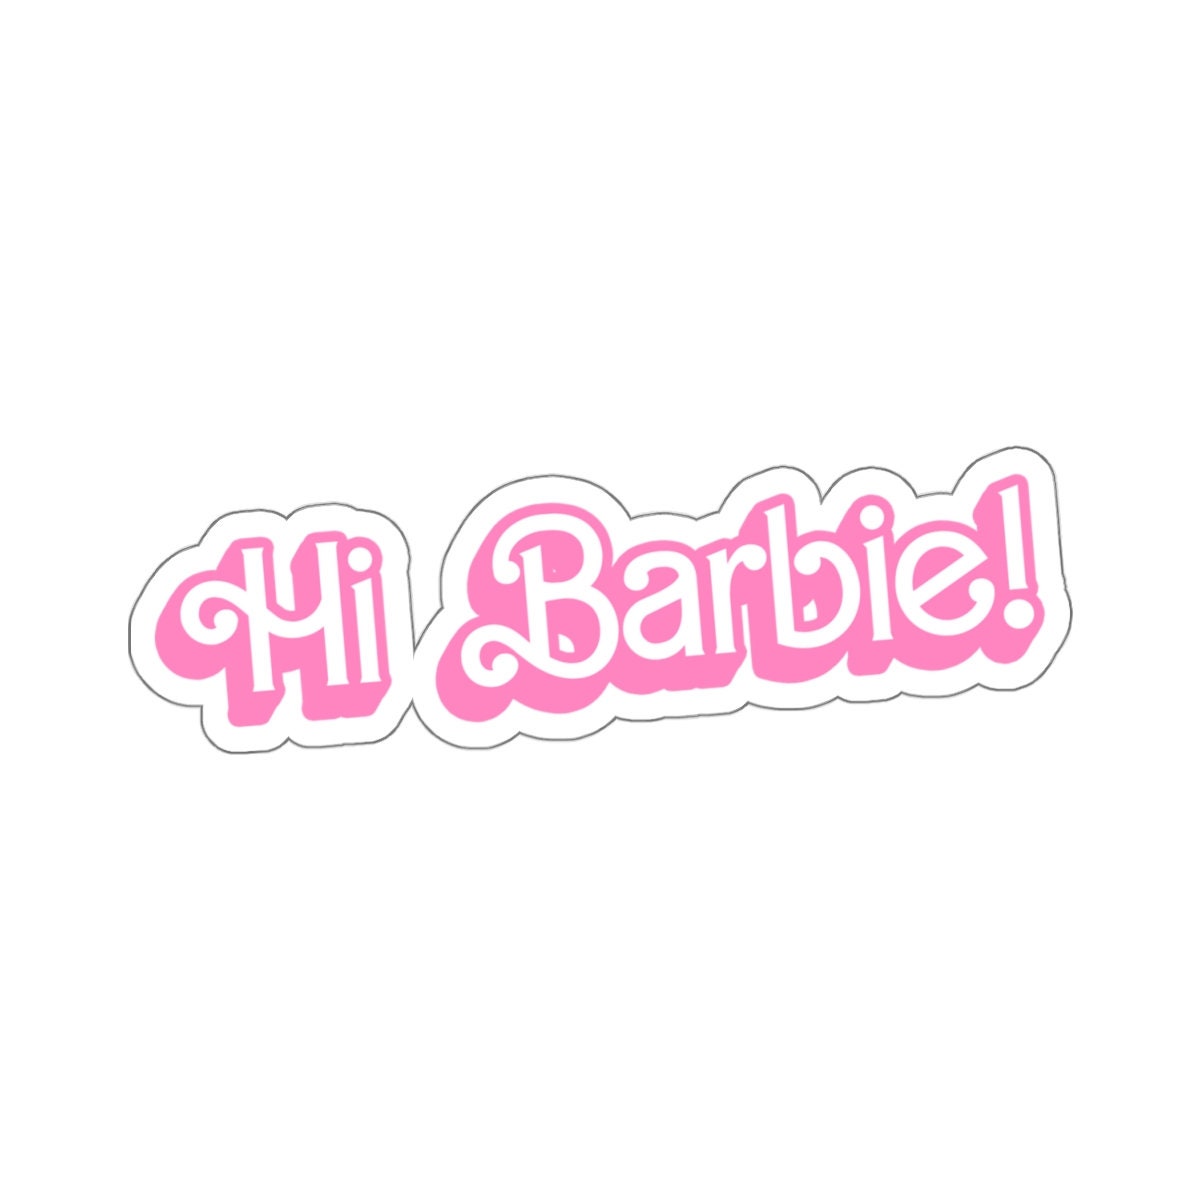 Barbie Logo Vinyl Decal Sticker - Great for Wine Glasses, Cups, Car, Bike